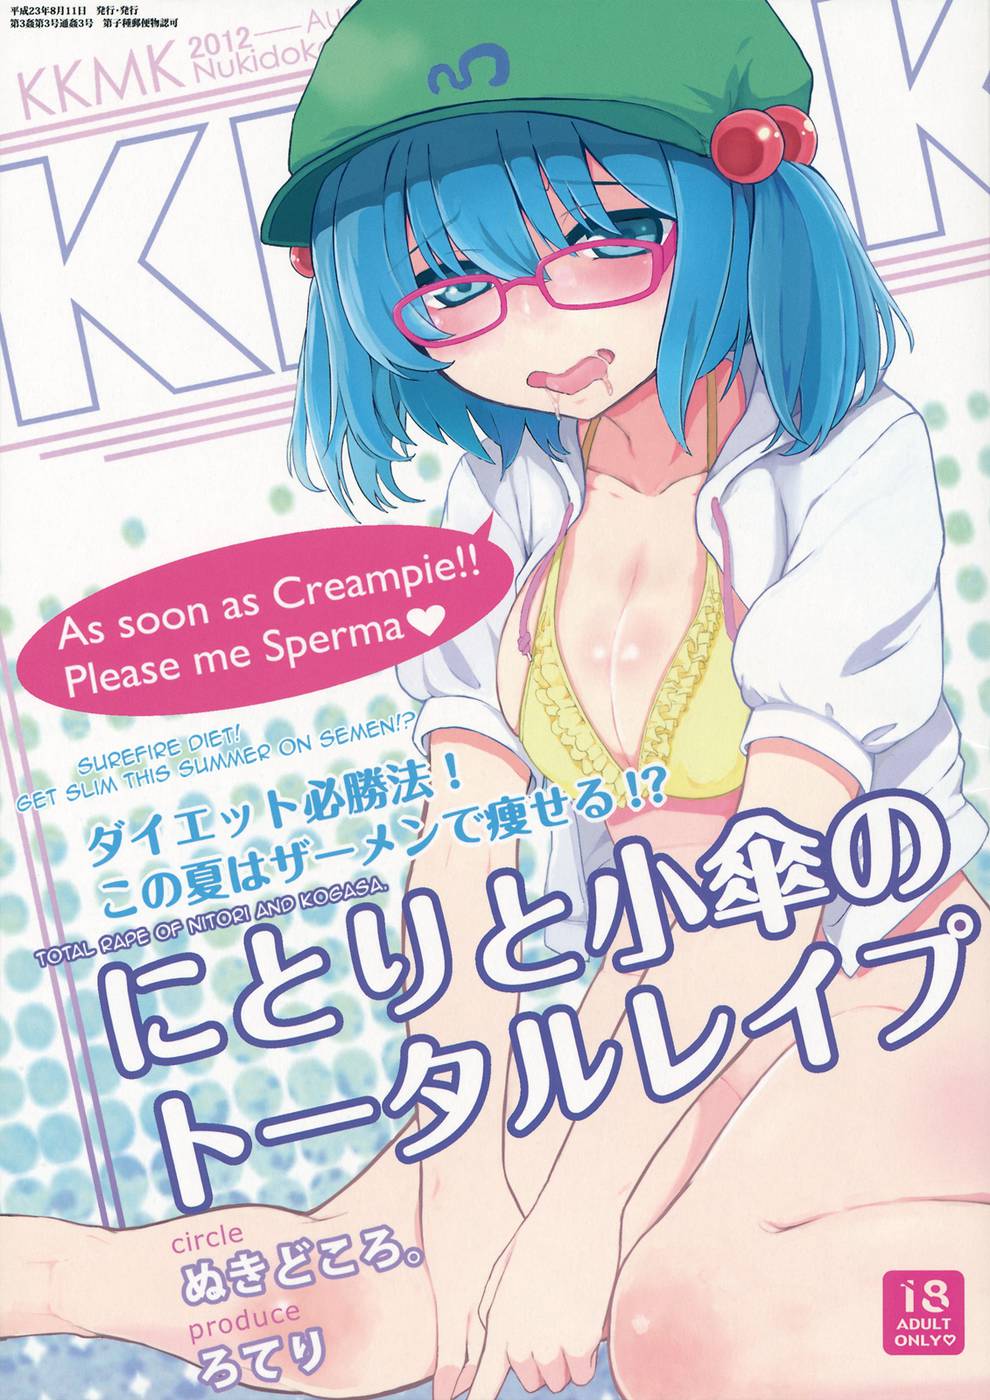 Hentai Manga Comic-KKMK-Vol 3-1